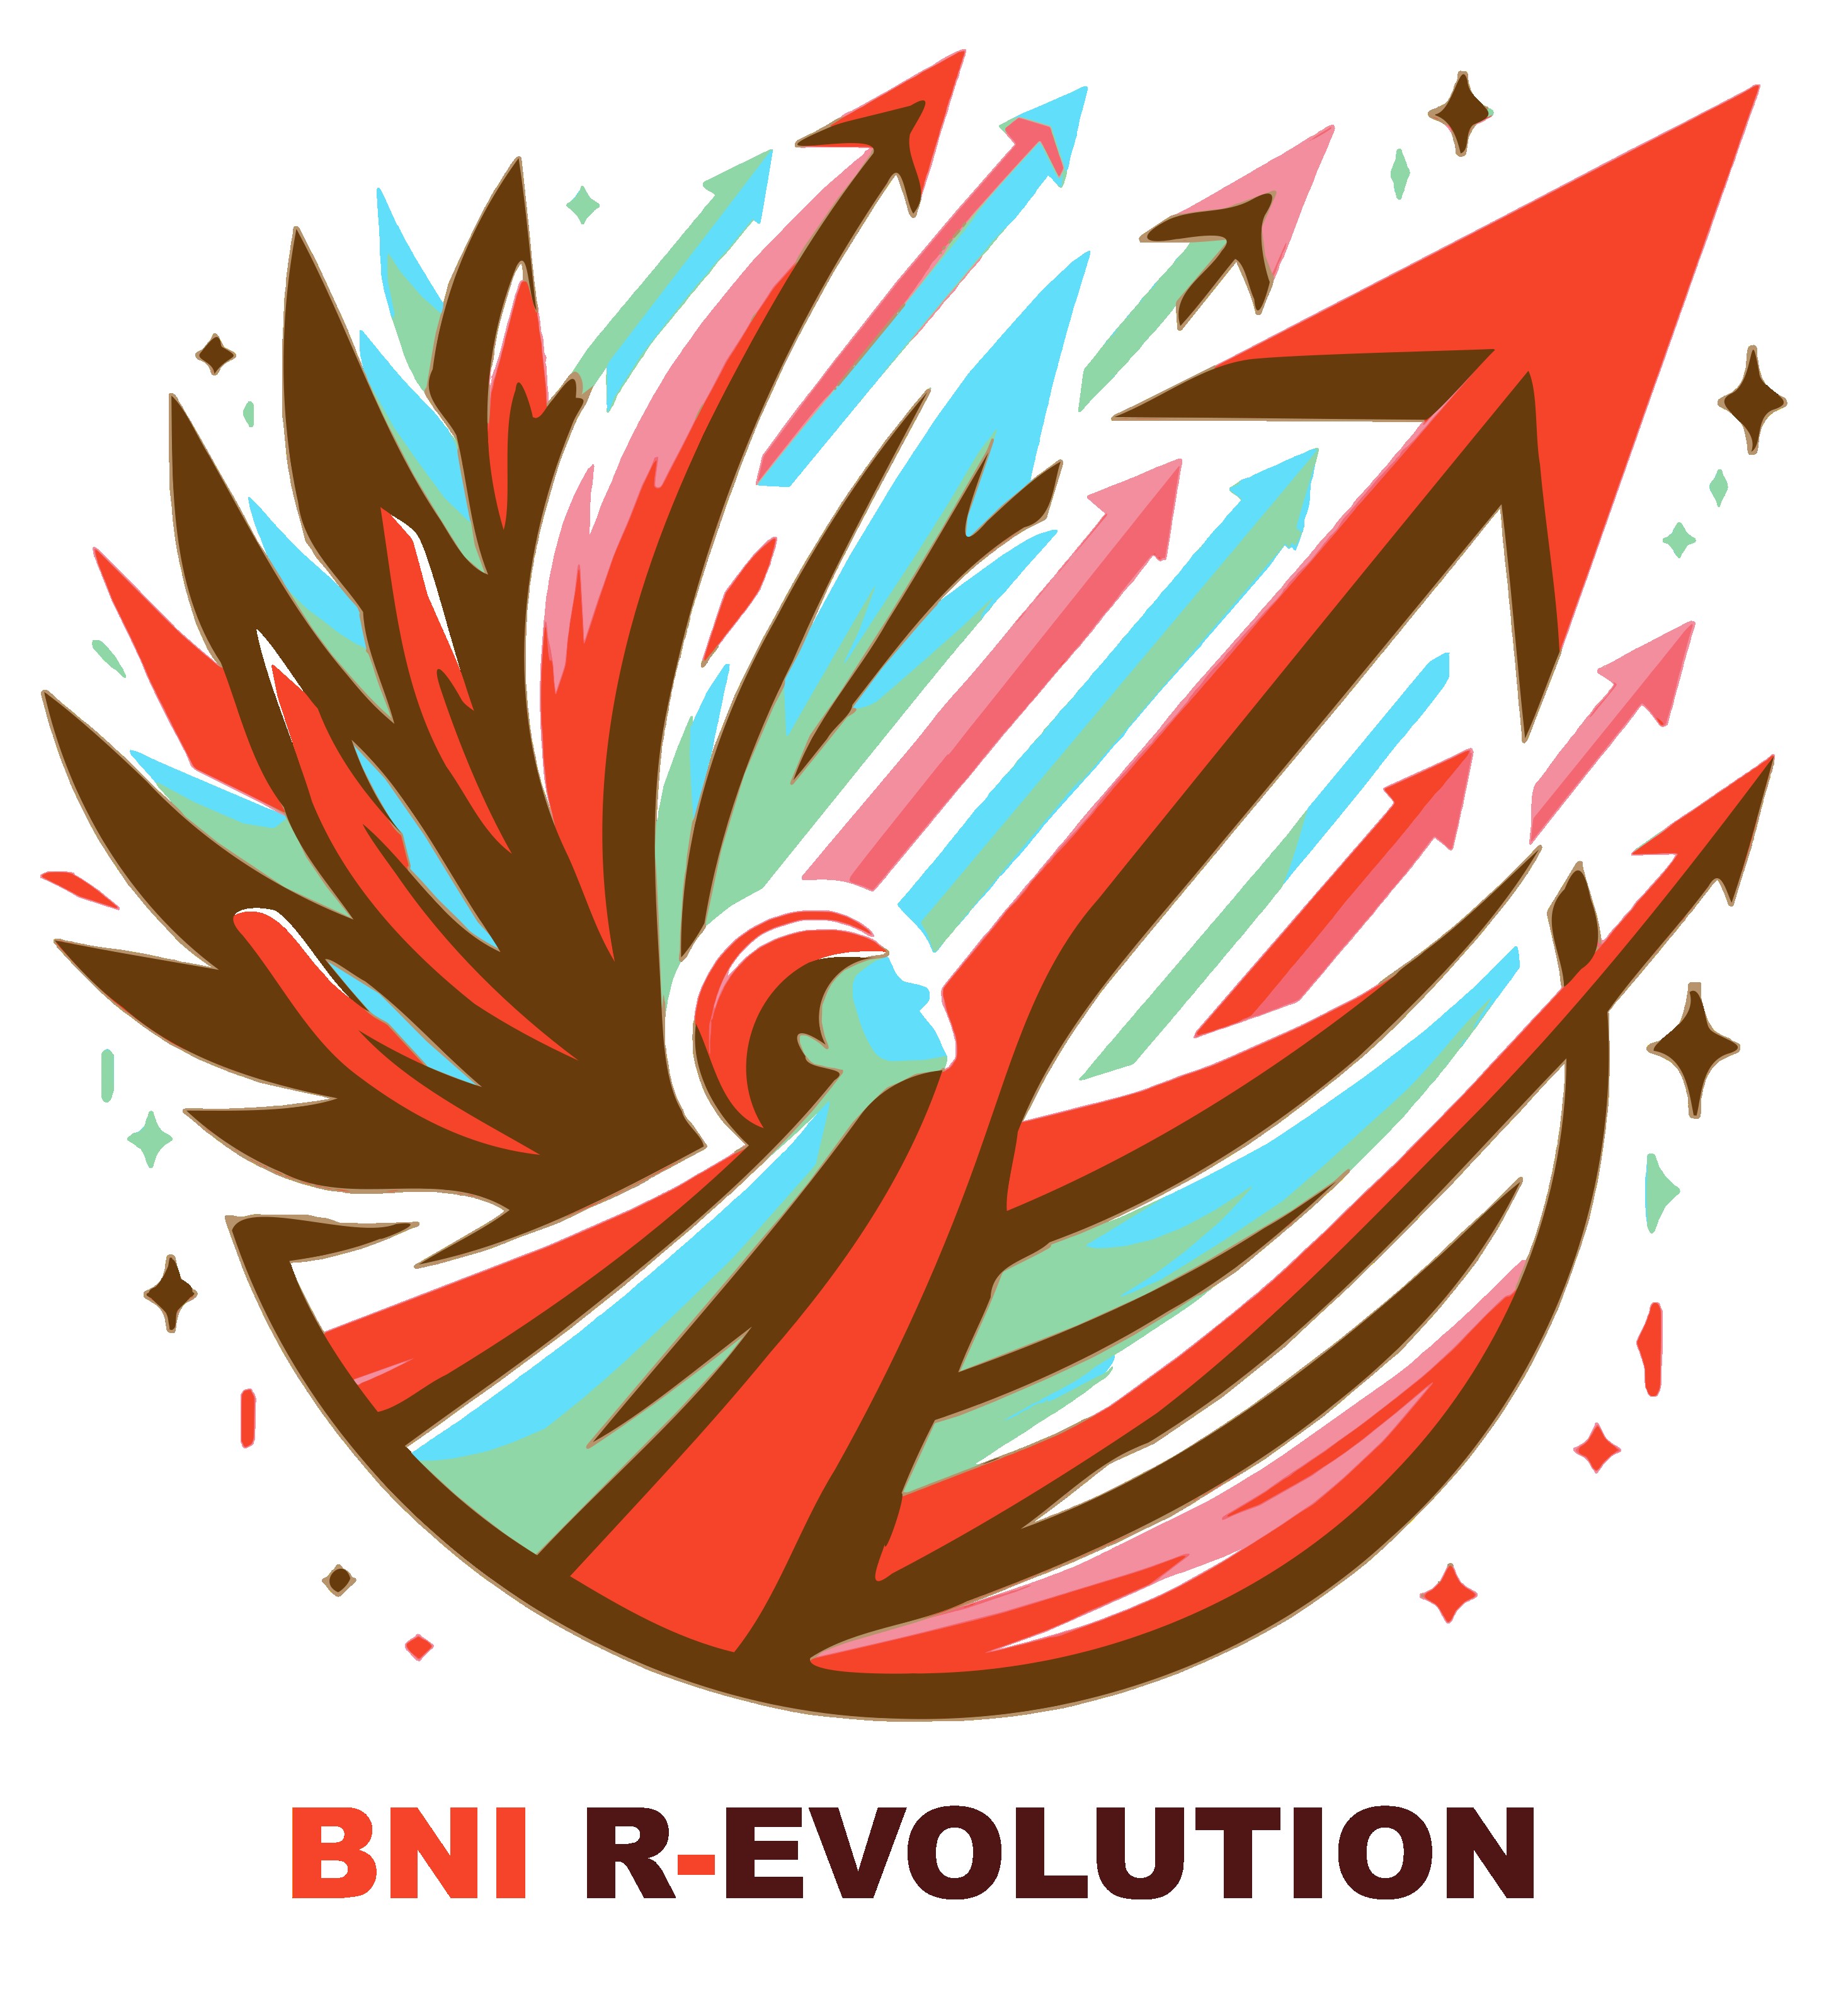 BNI R-EVOLUTION RIVIERE LIGURI  